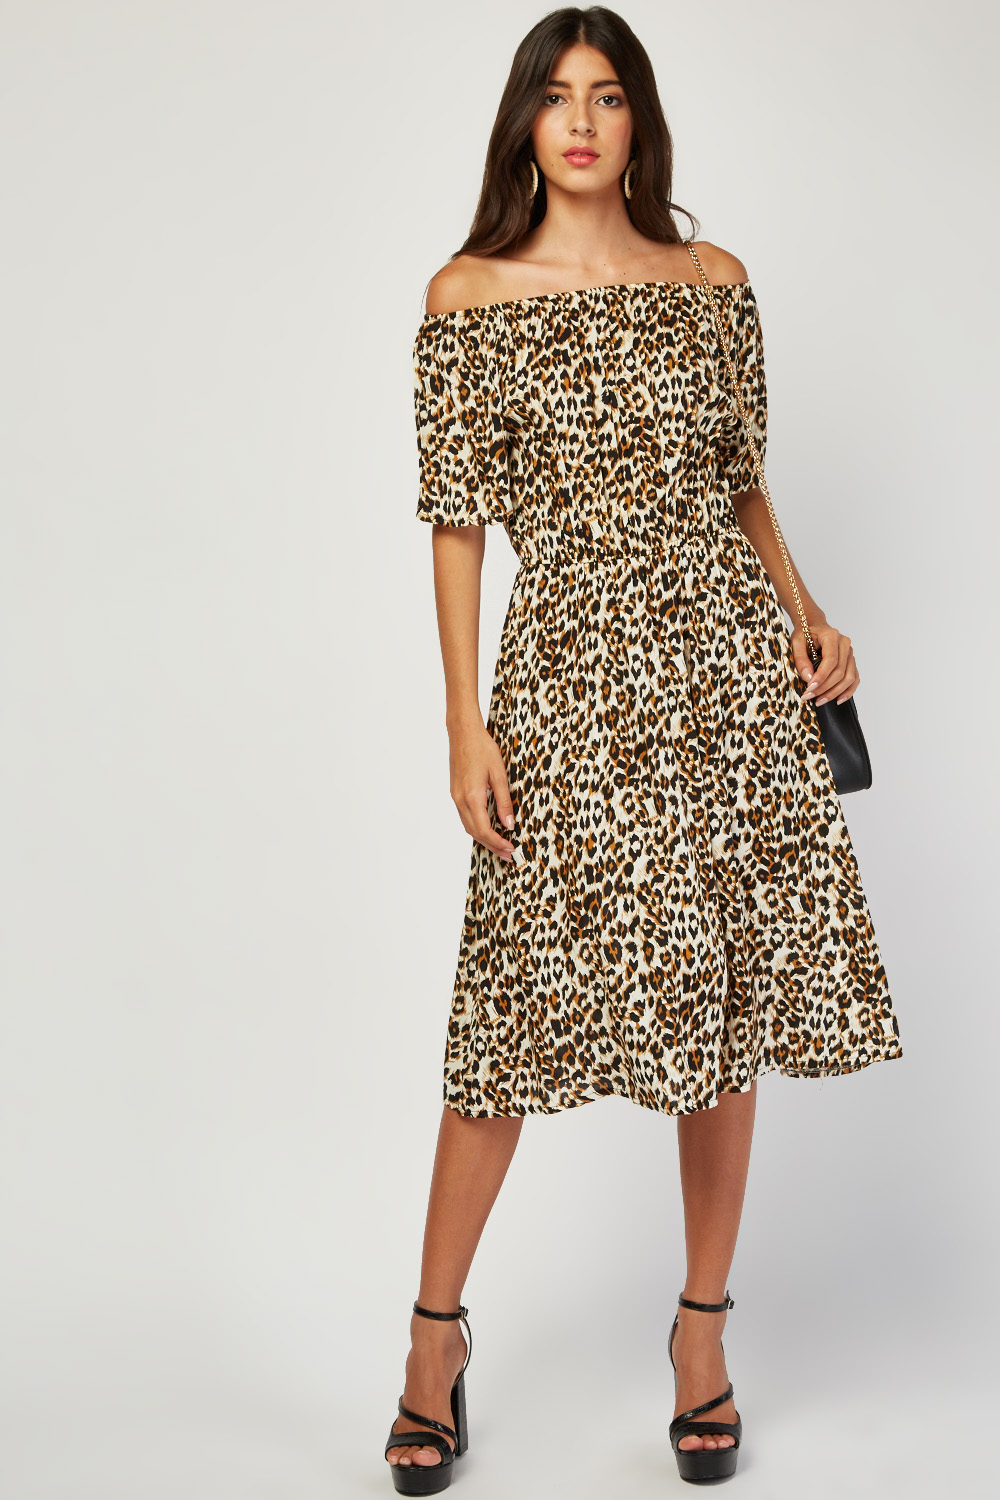 Off Shoulder Midi Leopard Print Dress - Just $7